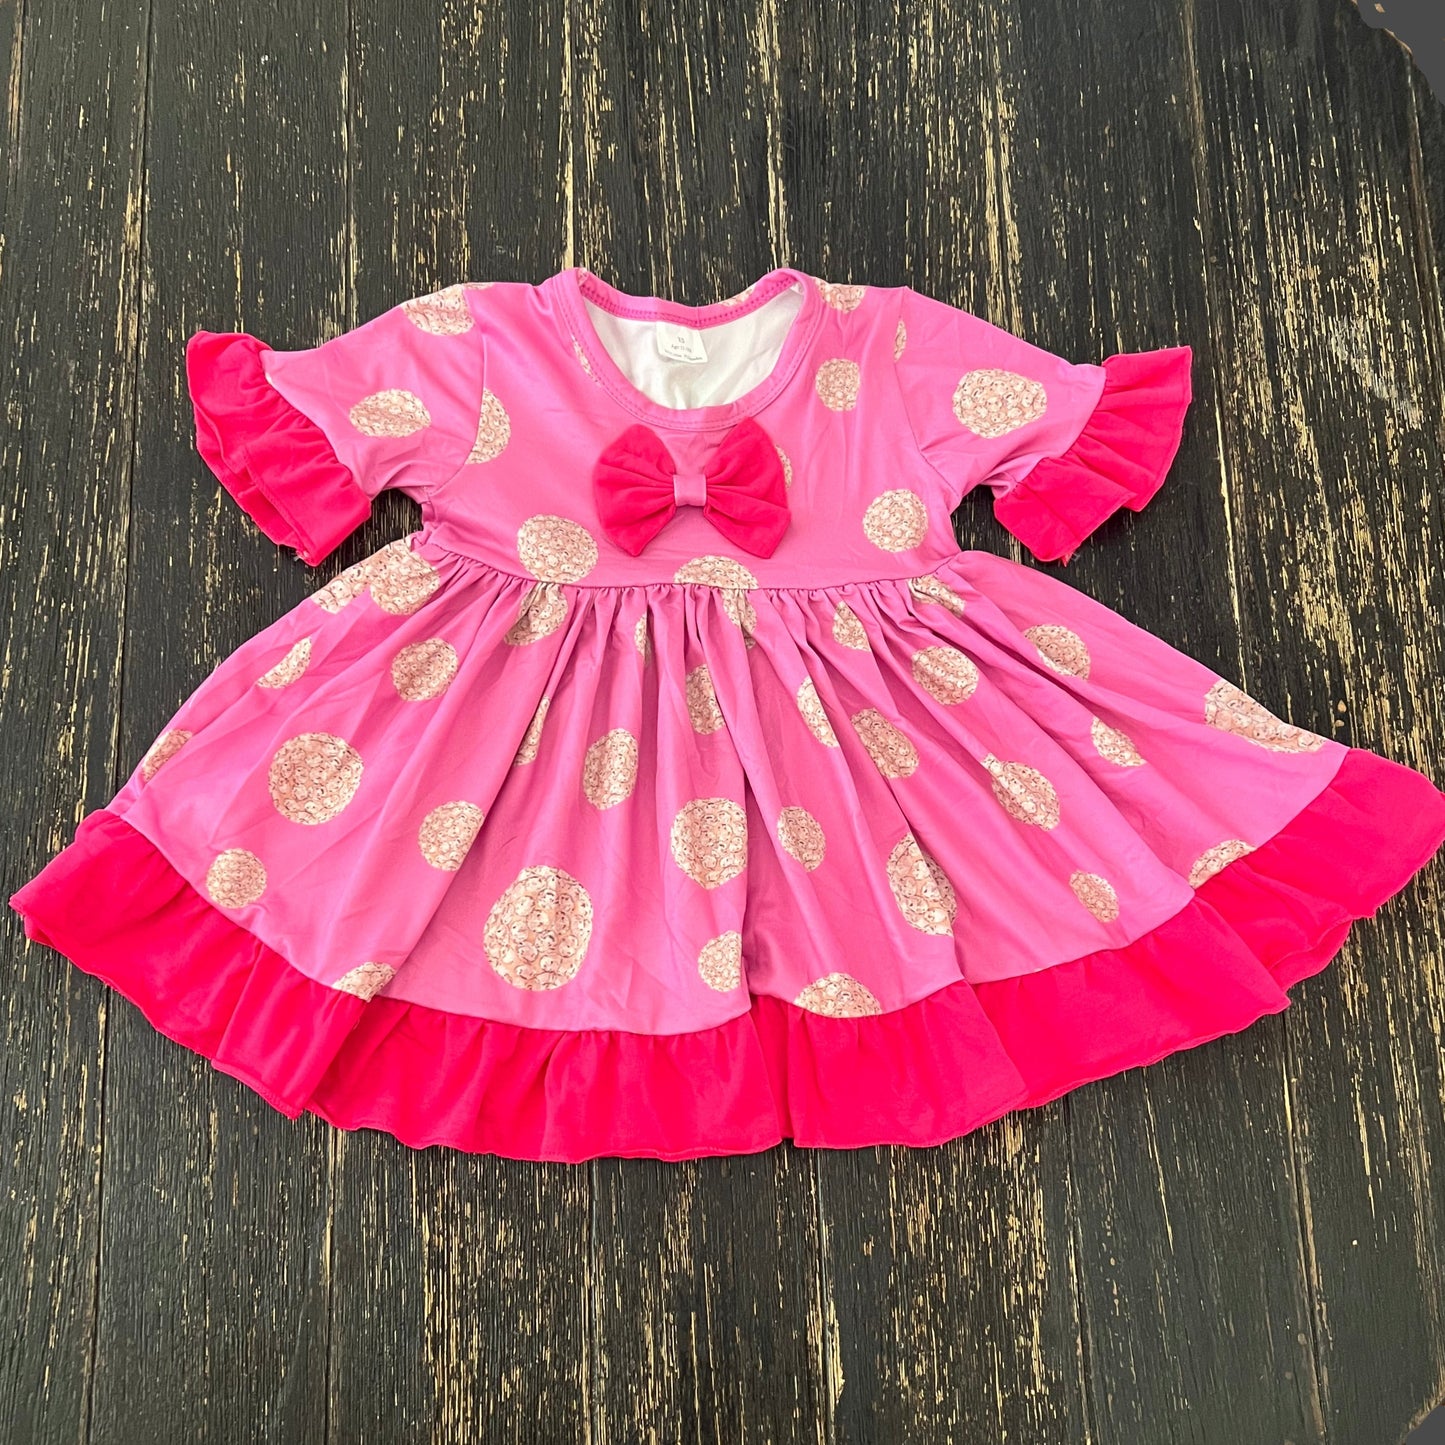 Pink polka dot mouse inspired dress